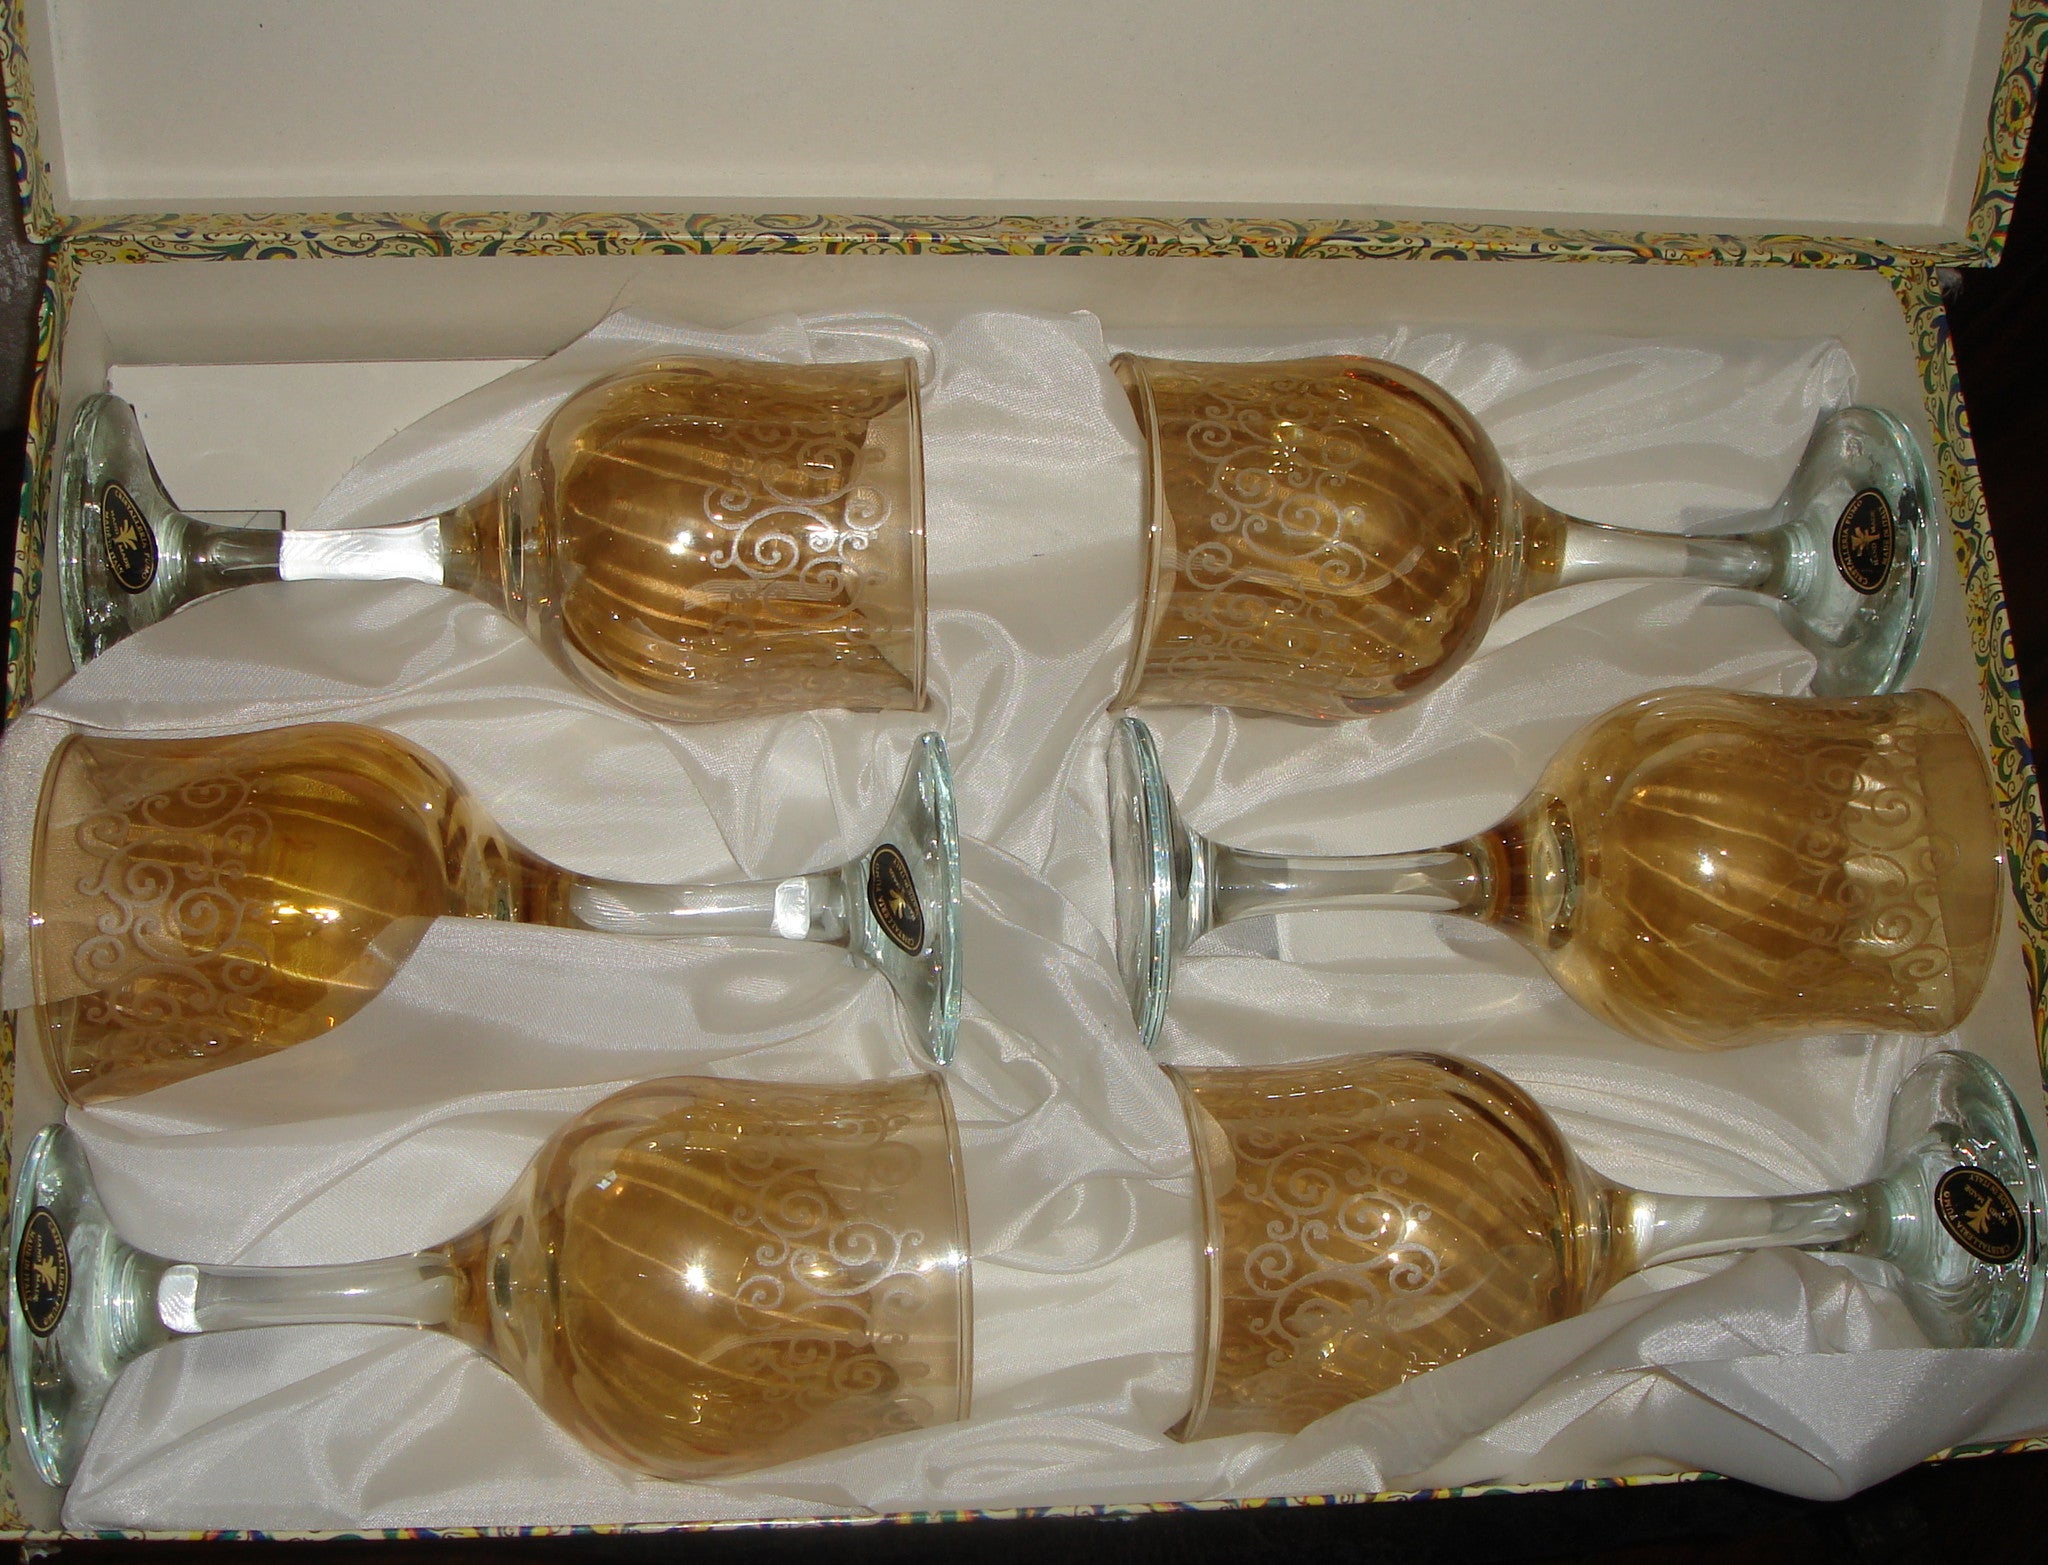 Tulipa Beer Glasses Set of 6 (18.3 oz) – Crystal Decor